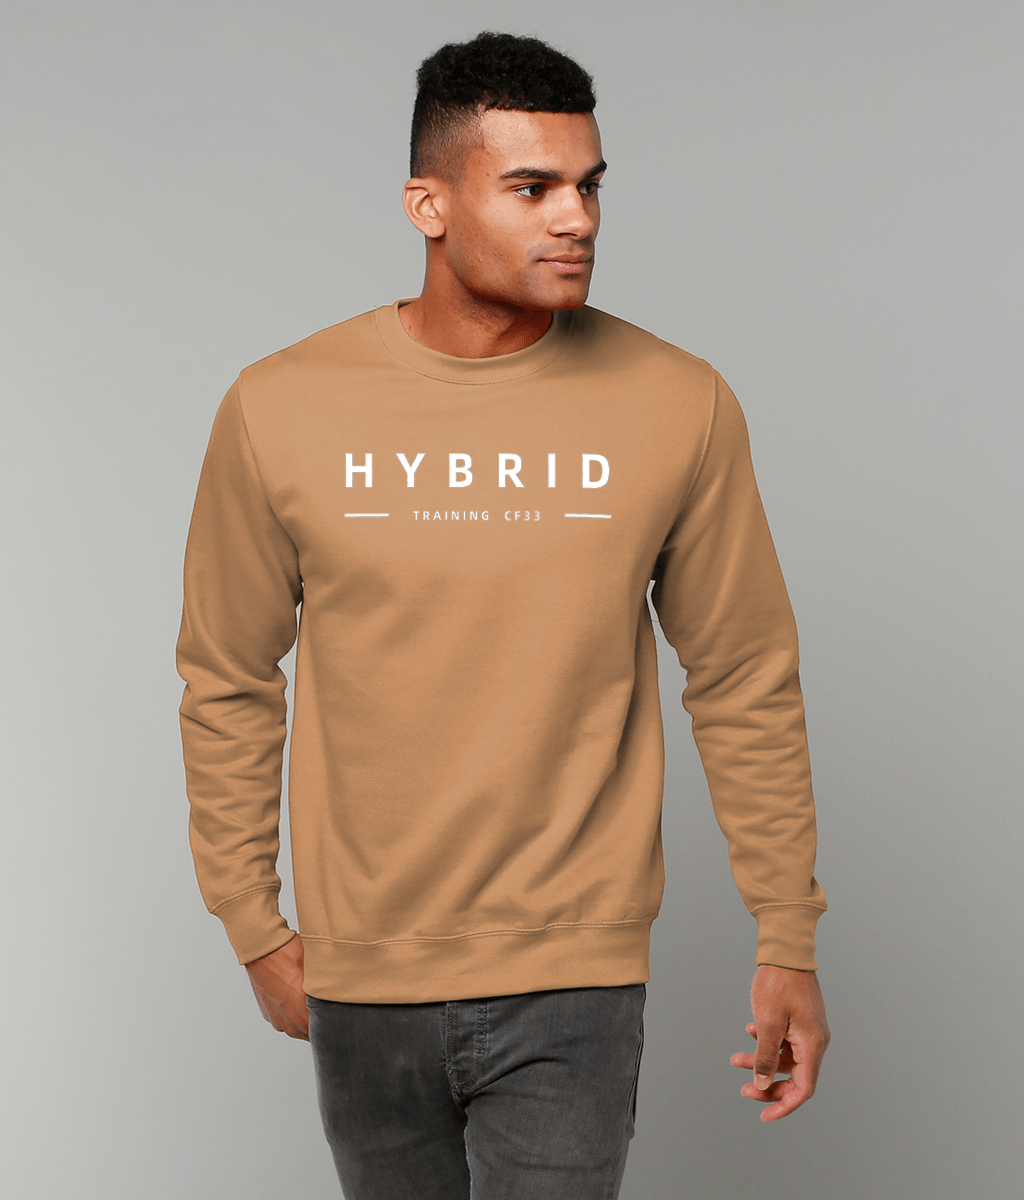 HYBRID TRAINING - Sweatshirt